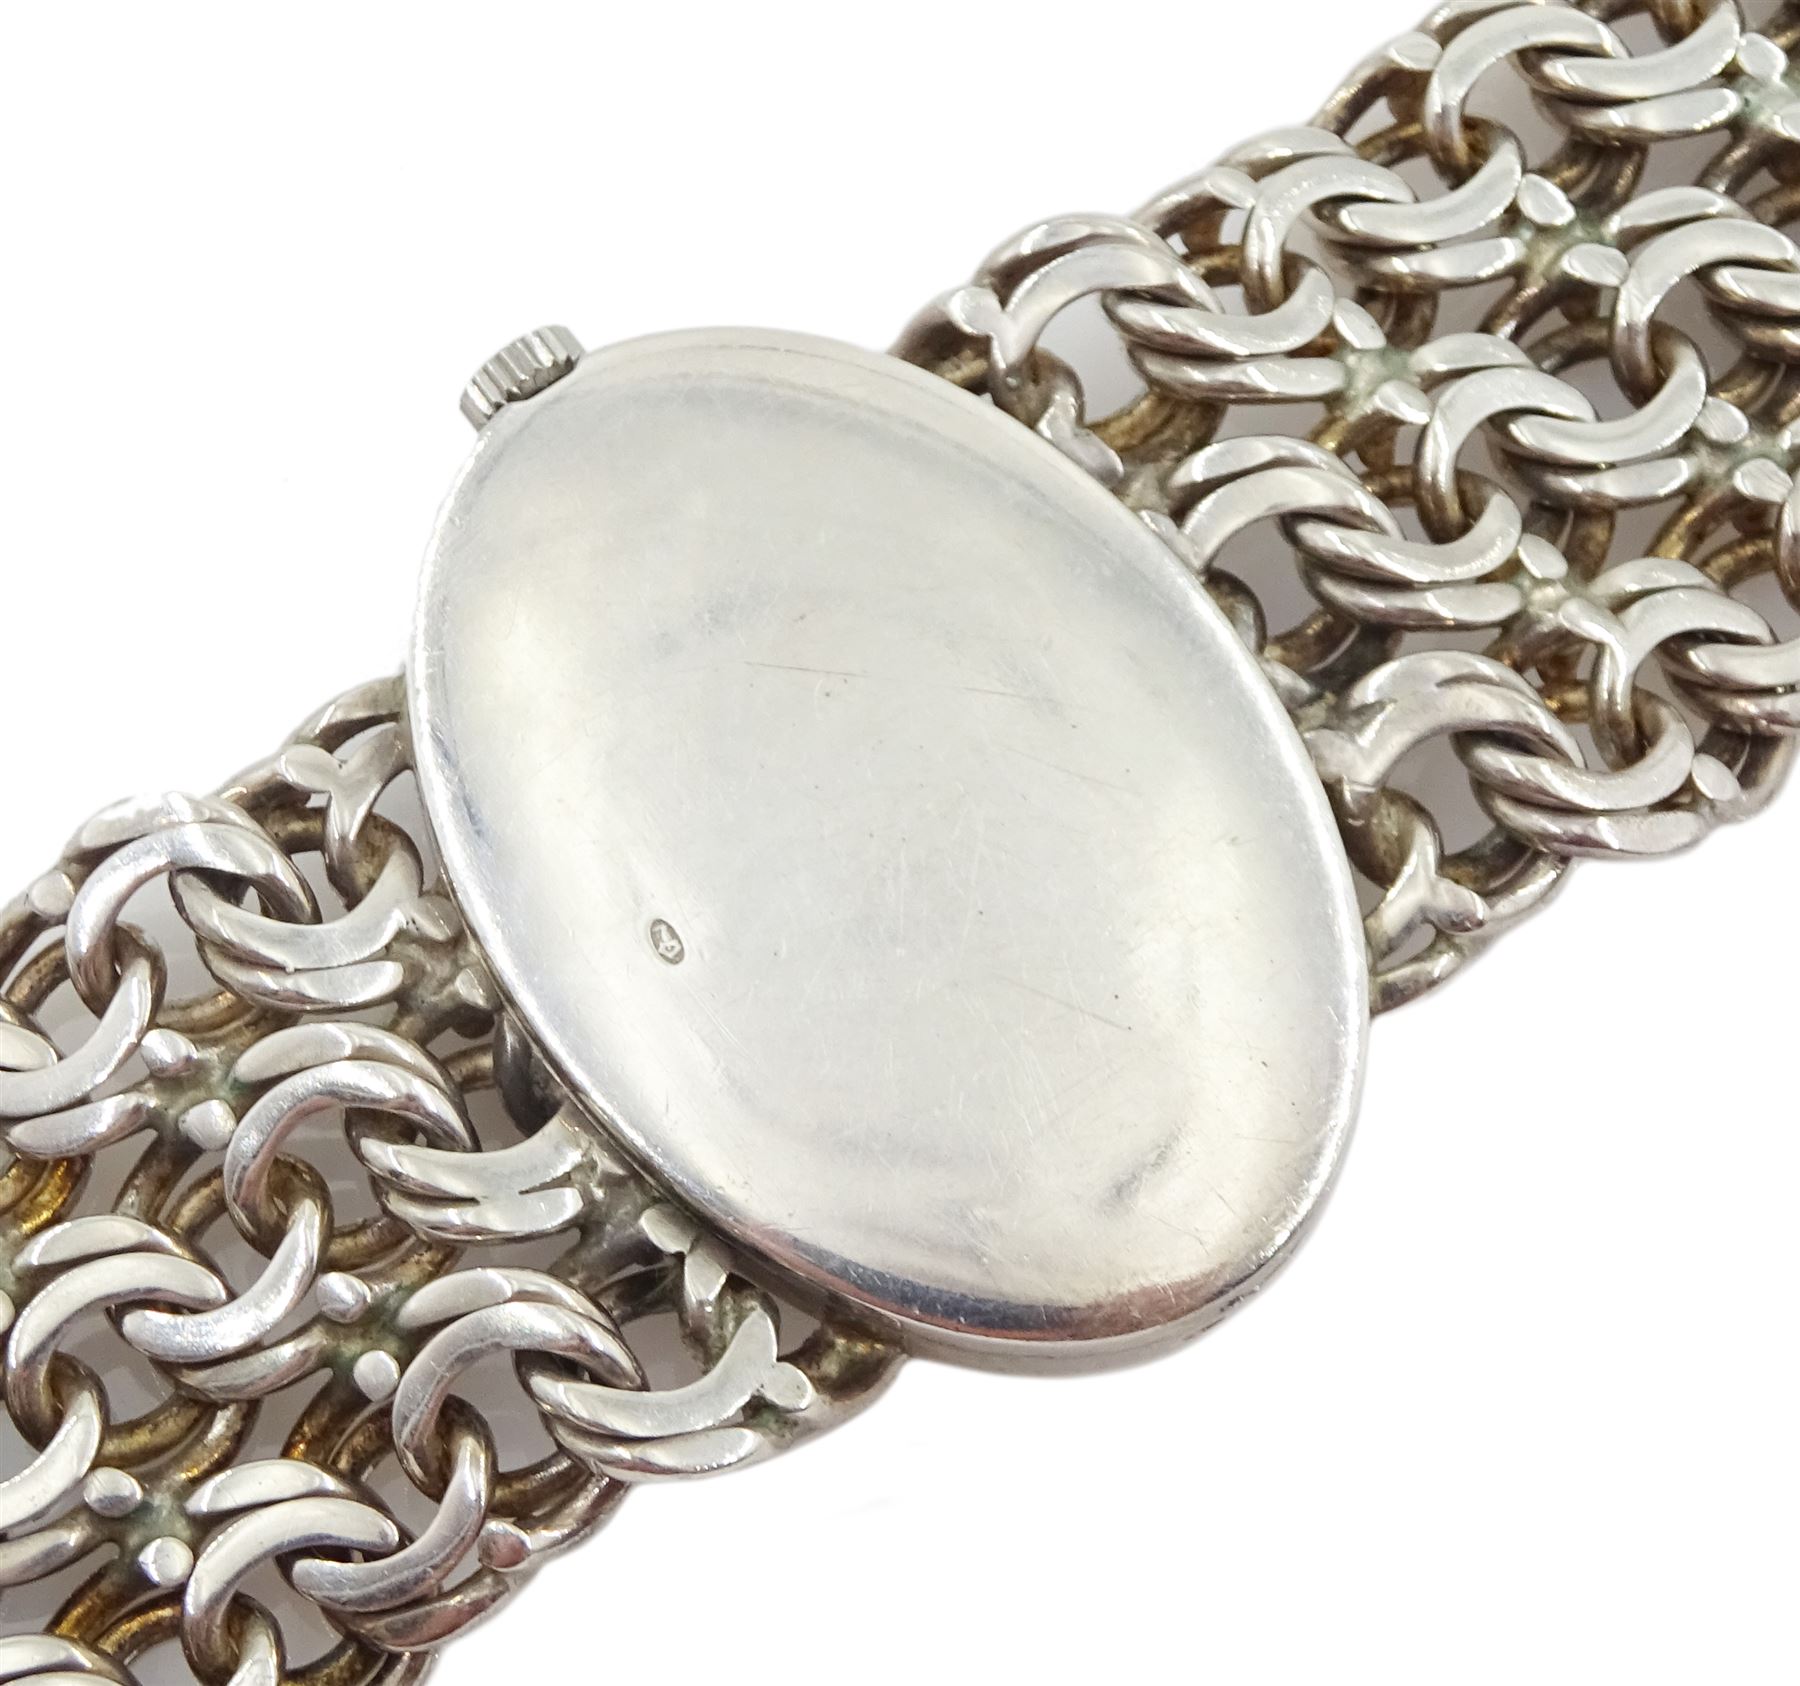 Omega De Ville ladies manual wind silver bracelet wristwatch - Image 3 of 3